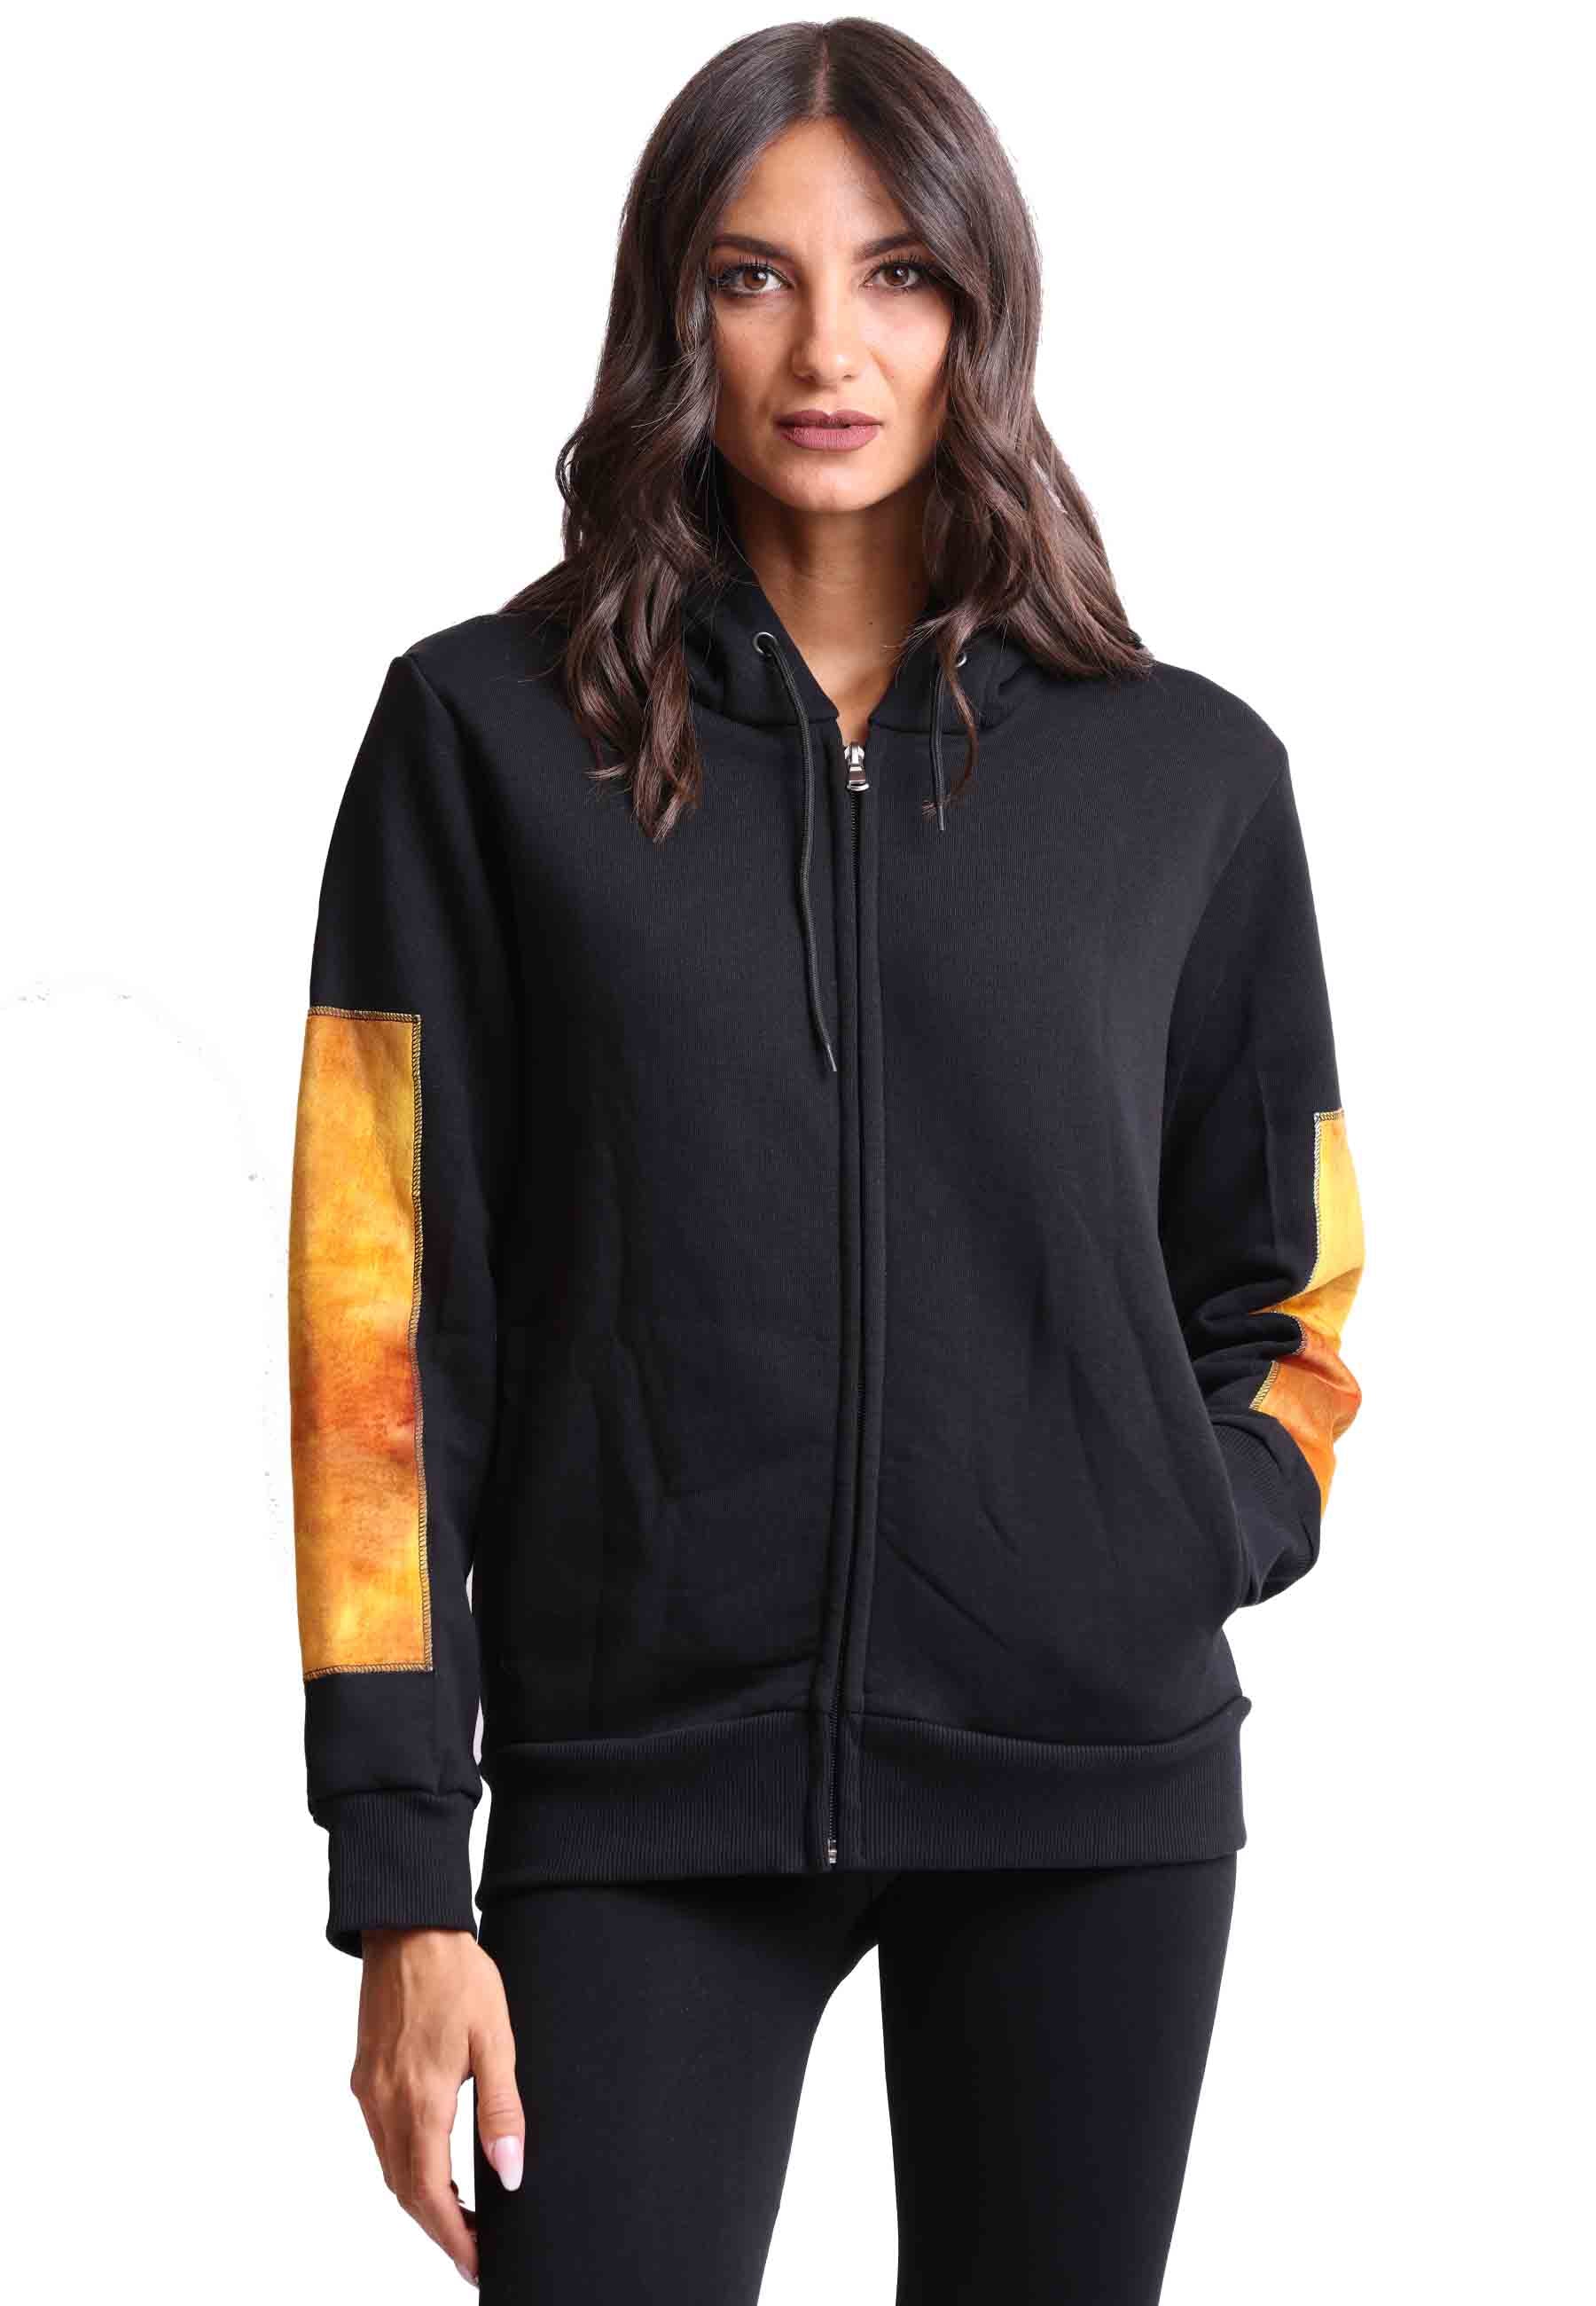 Women's sweatshirt with hood and zip in black fabric and silk print